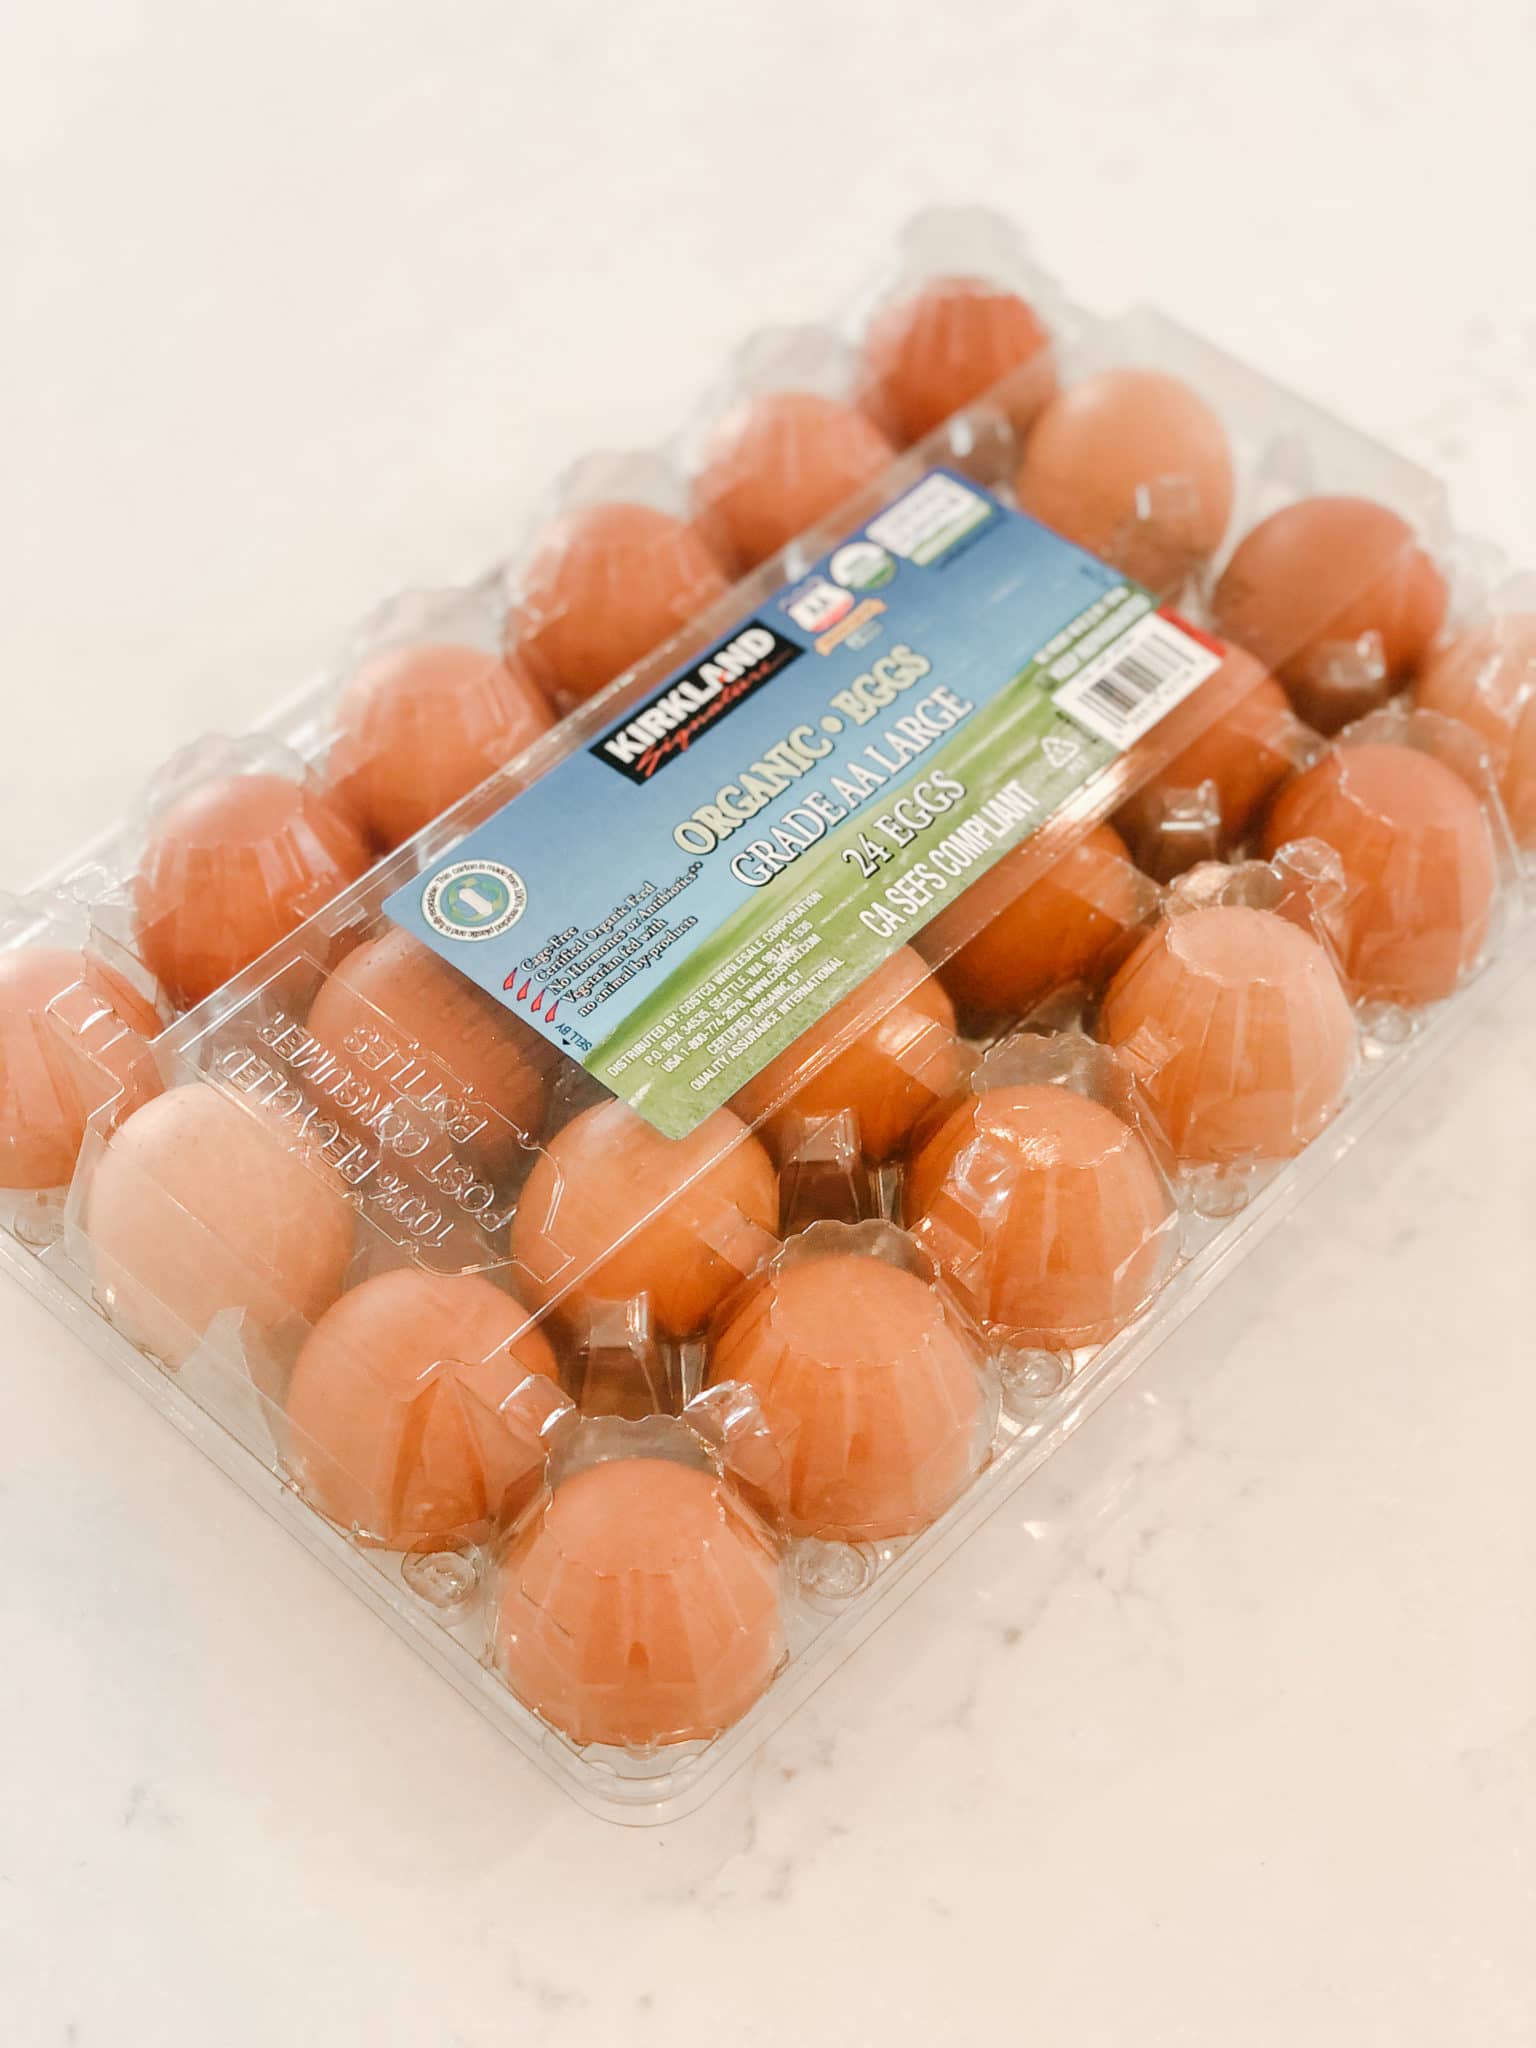 Kirkland organic eggs from Costco